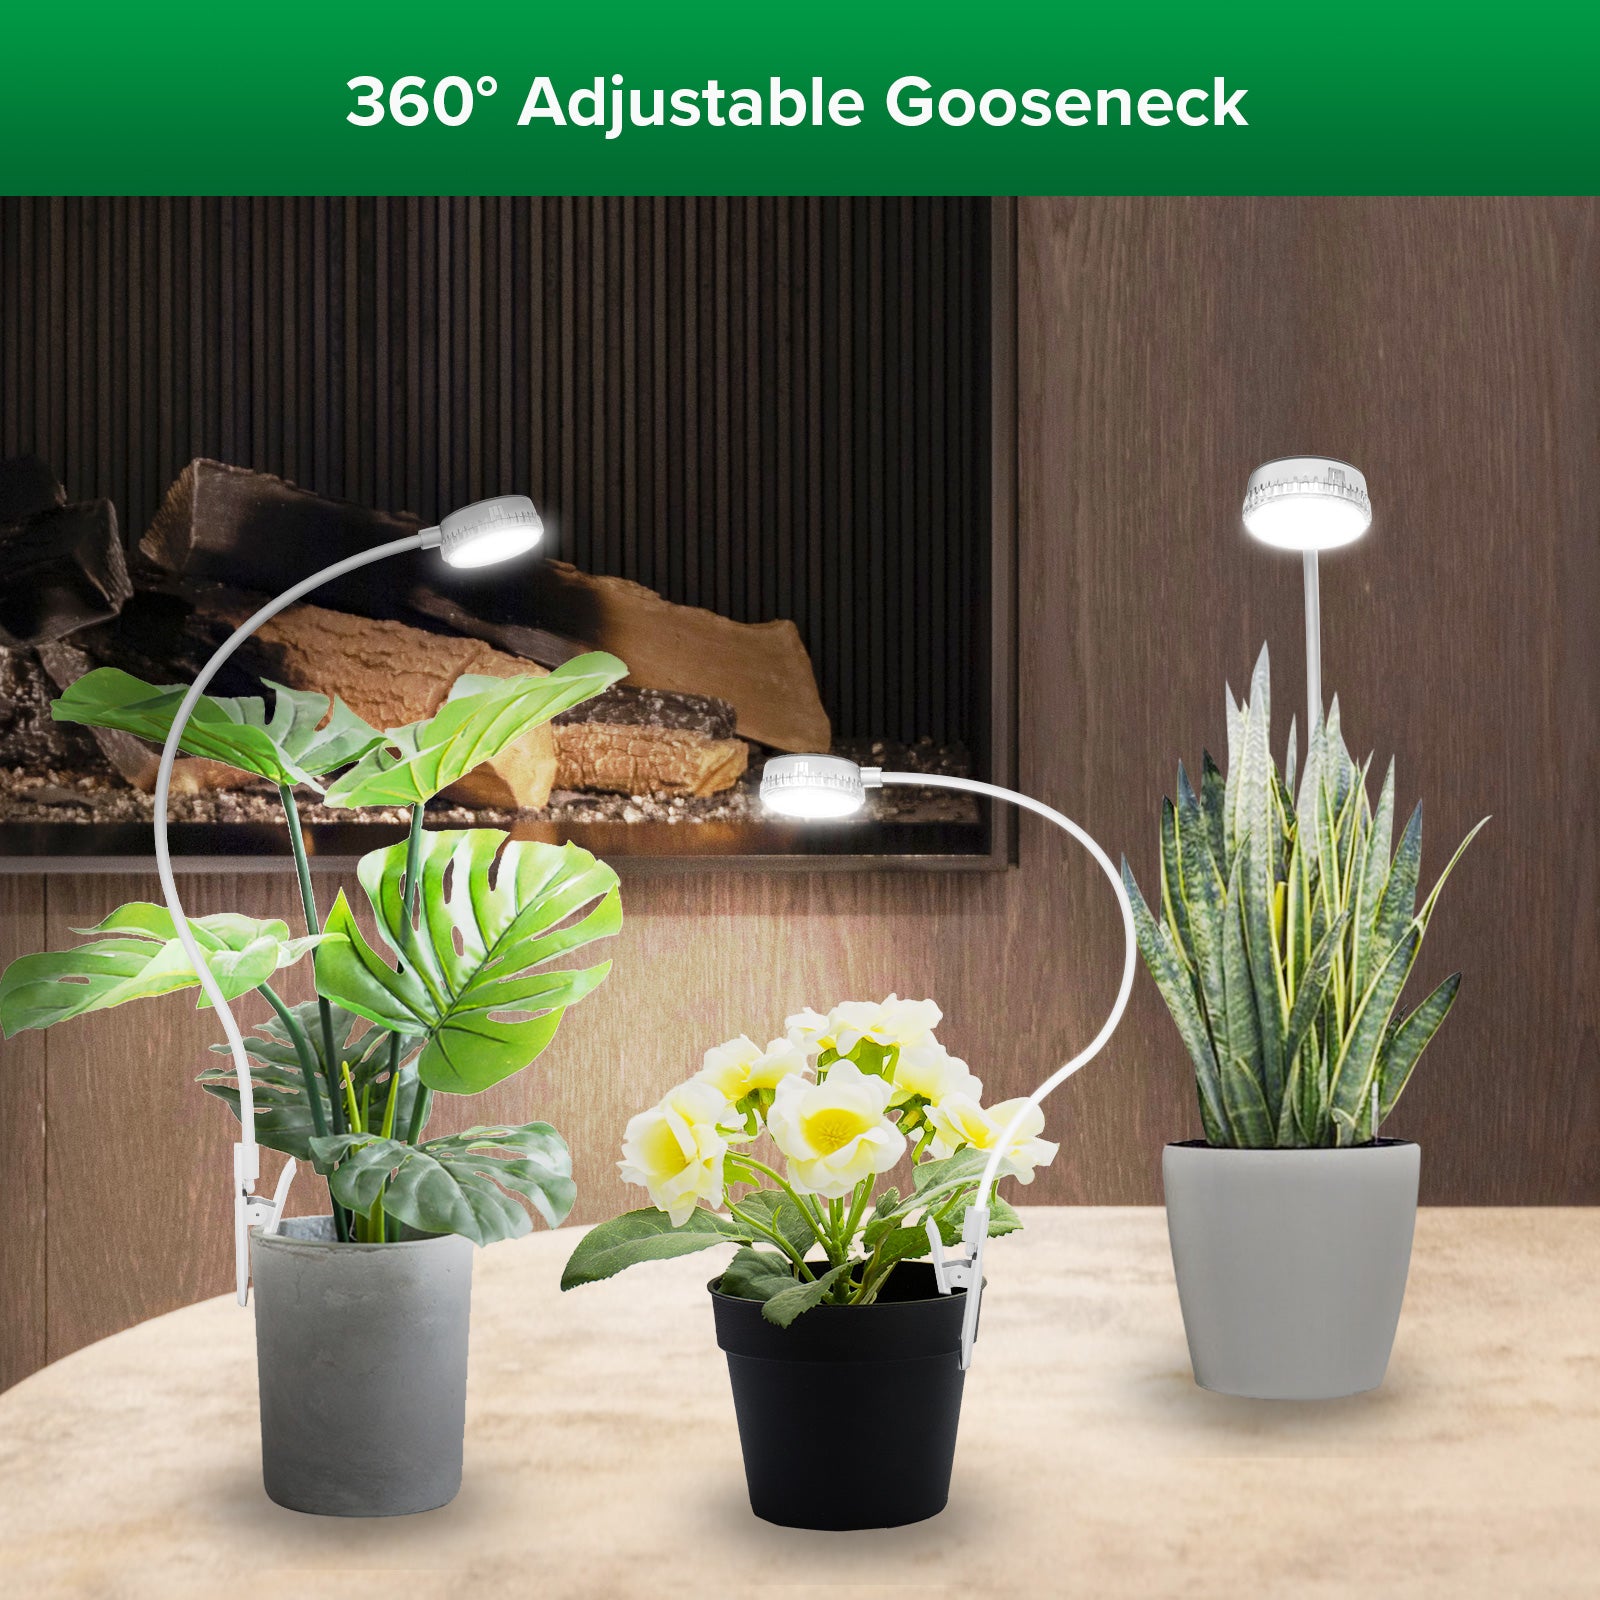 Pot Clip LED Grow Light (US ONLY) has 360° adjustable gooseneck.